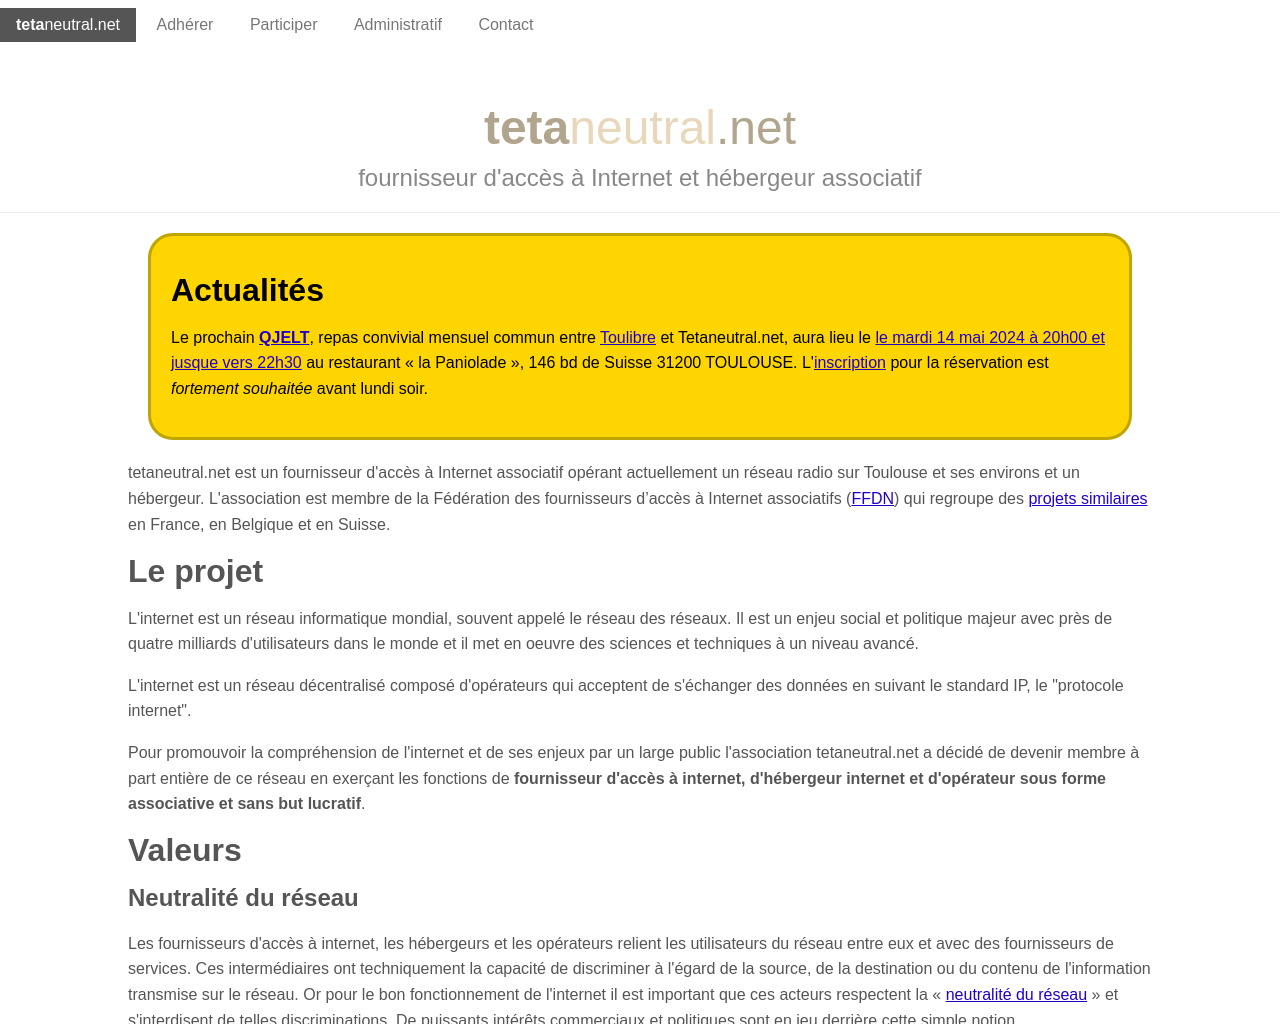 tetaneutral.net